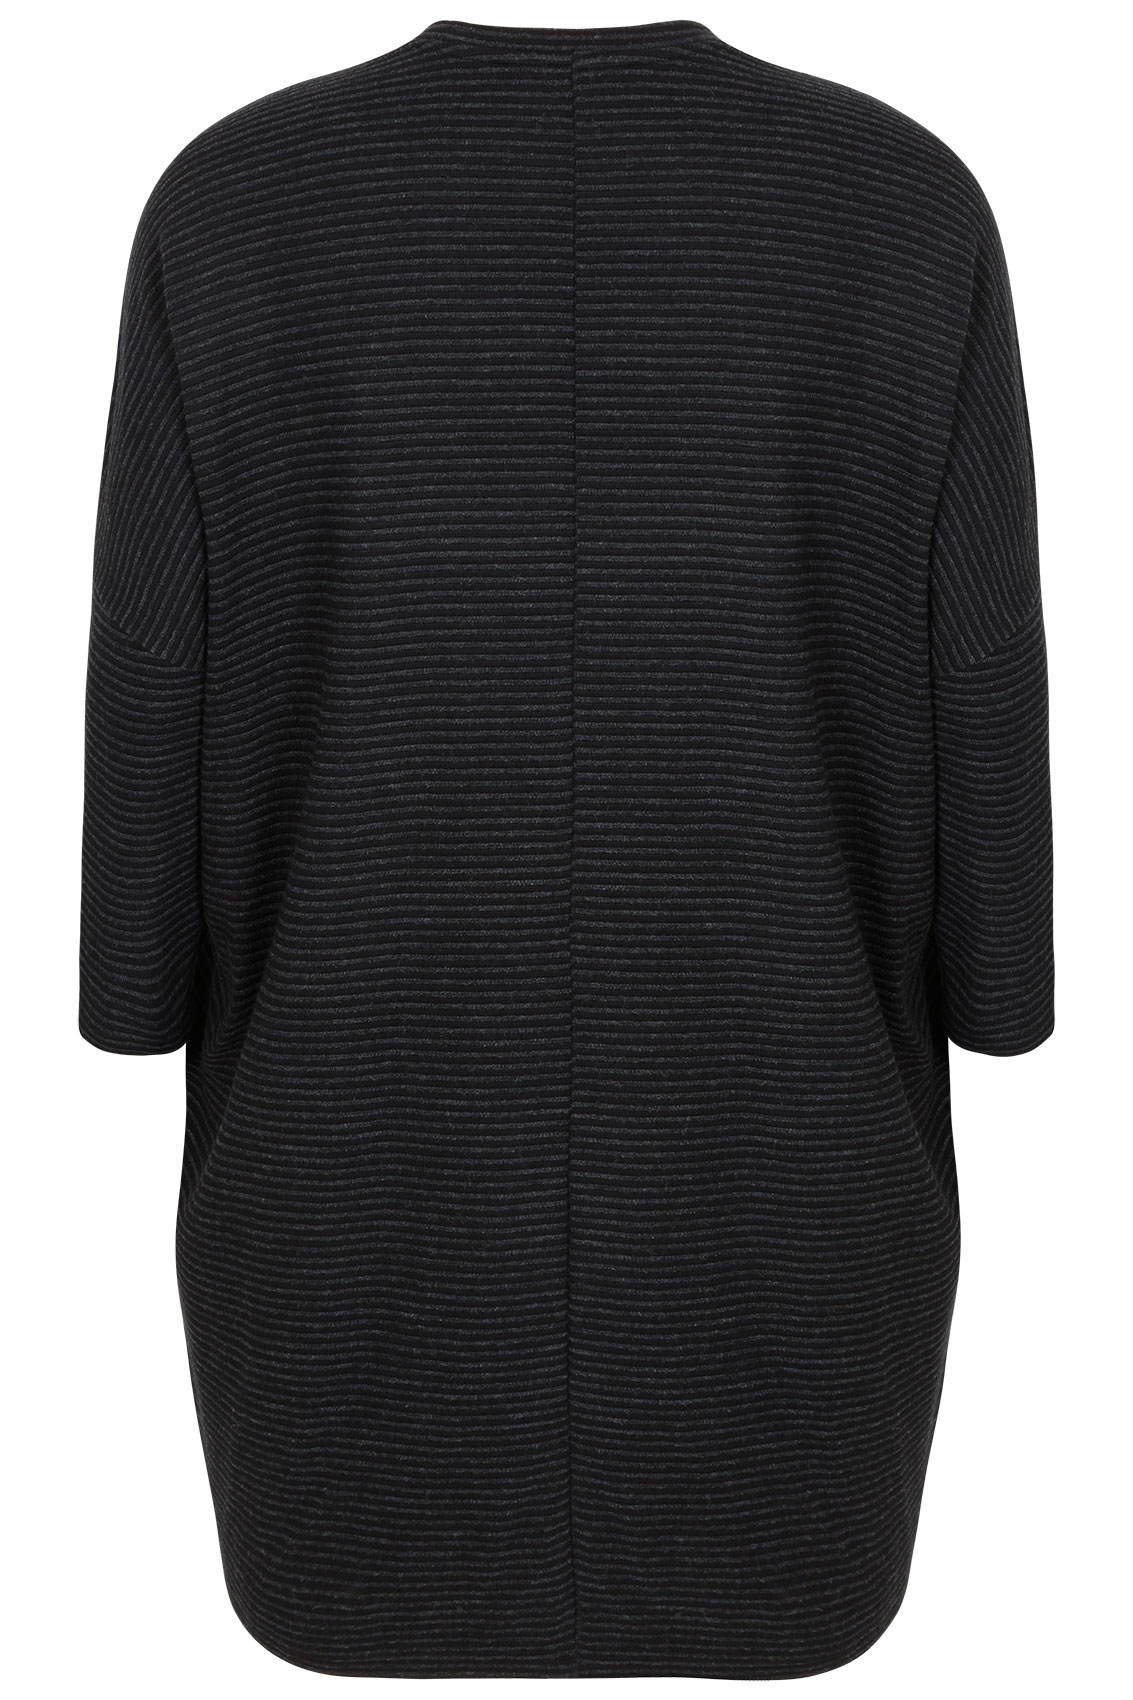 Black & Grey Stripe Cocoon Cardigan, Plus size 16 to 36